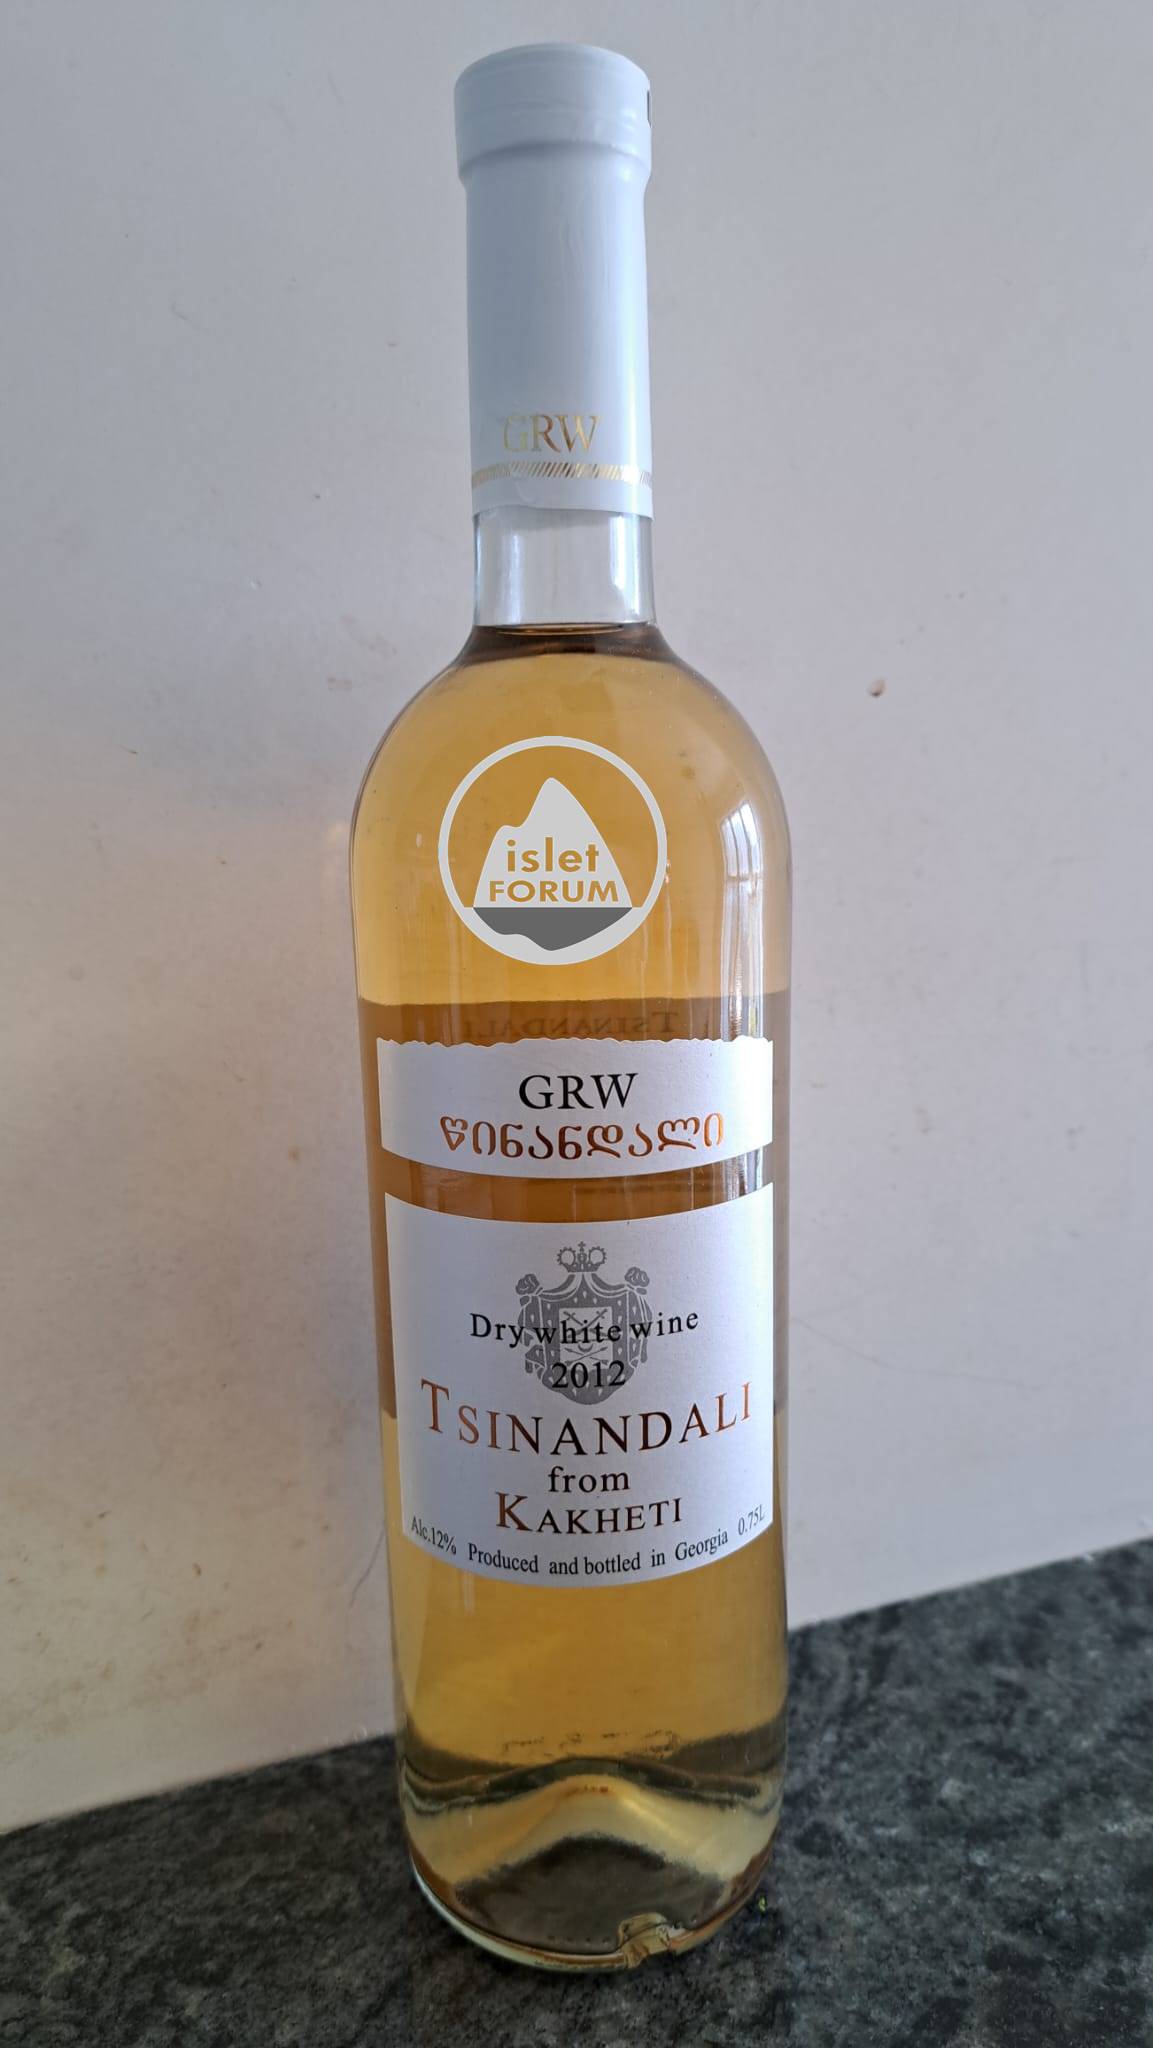 GRW Dry white wine 2012 Tsinandali from Kakheti, 格魯吉亞白葡萄酒，isletforum，.jpeg